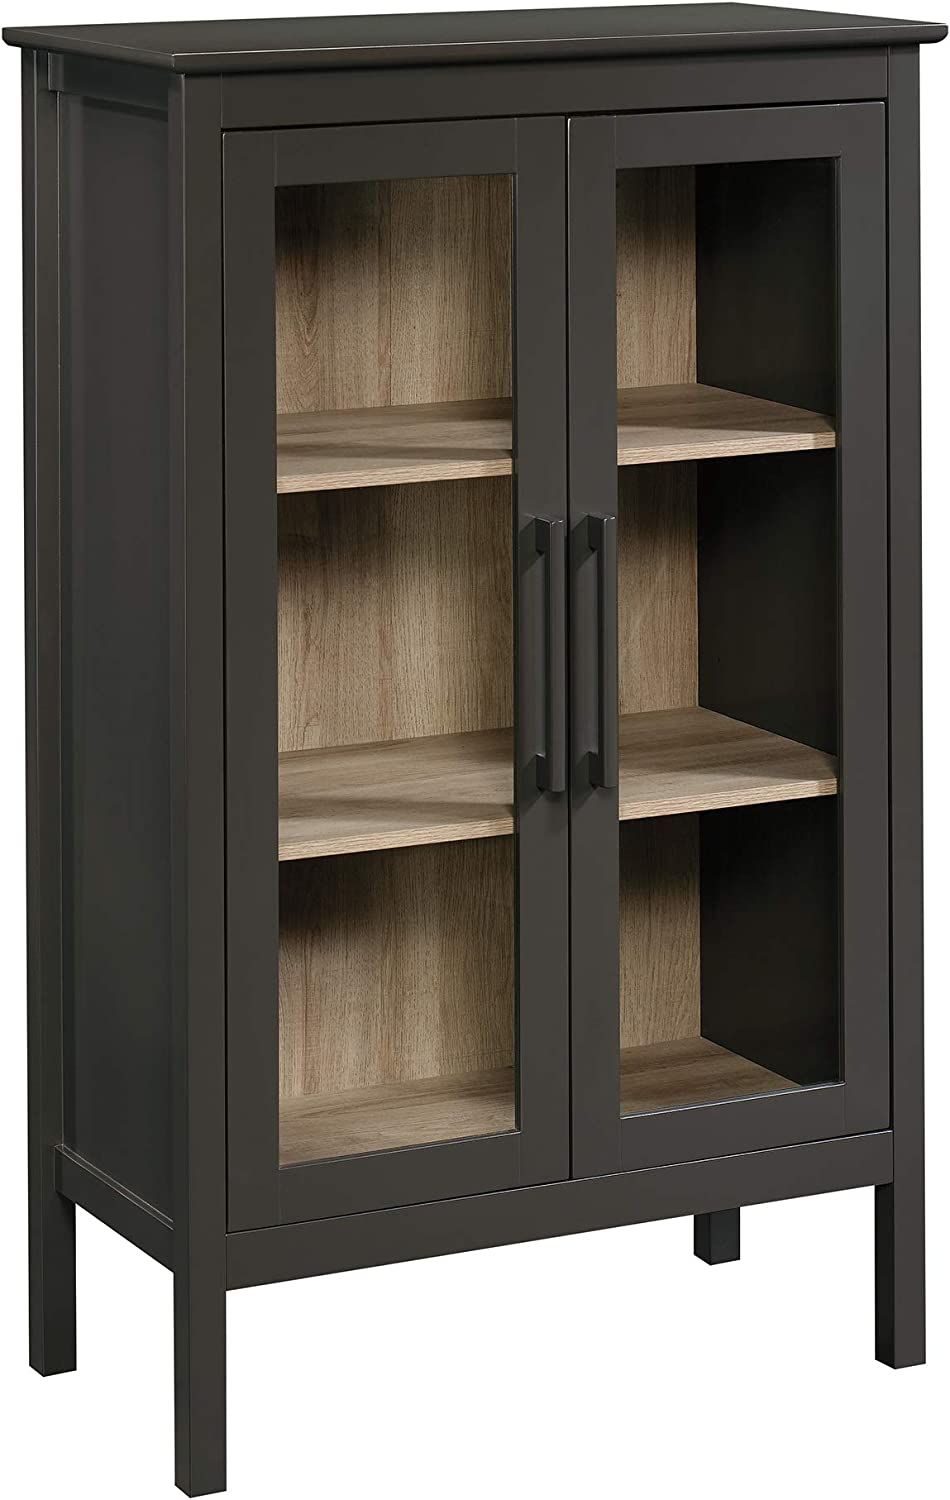 Sauder Anda Norr Display Pantry cabinets, L: 31.77" x W: 16.02" x H: 50.2", Slate Gray Finish | Amazon (US)